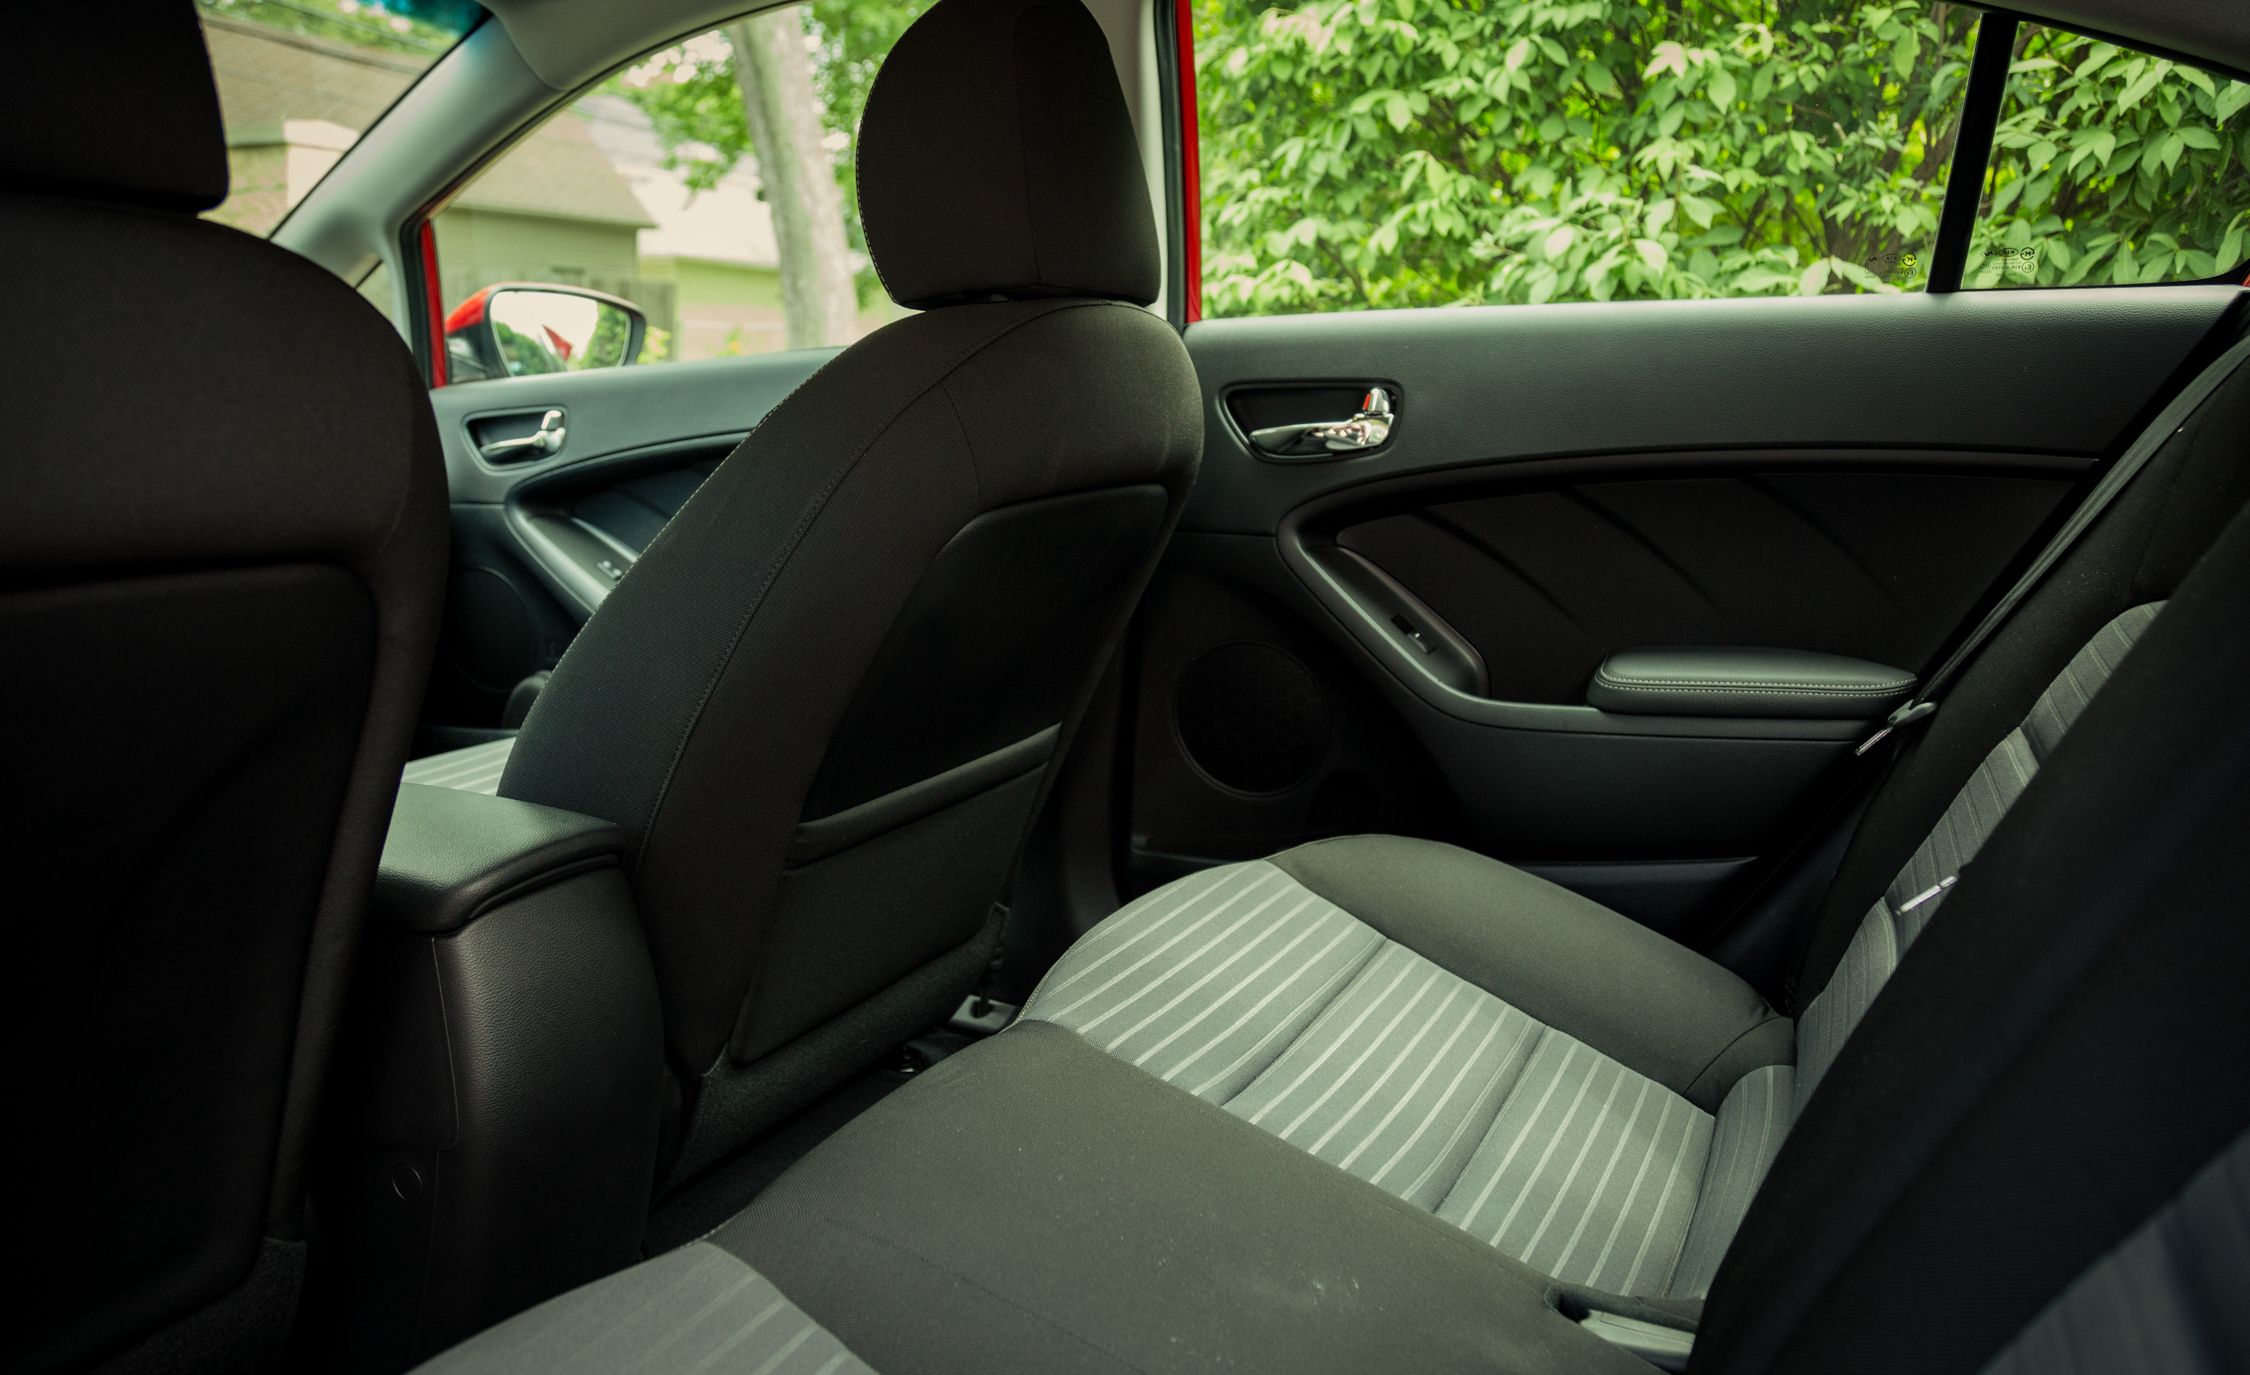 2017 Kia Forte Interior Seats Rear (View 4 of 13)